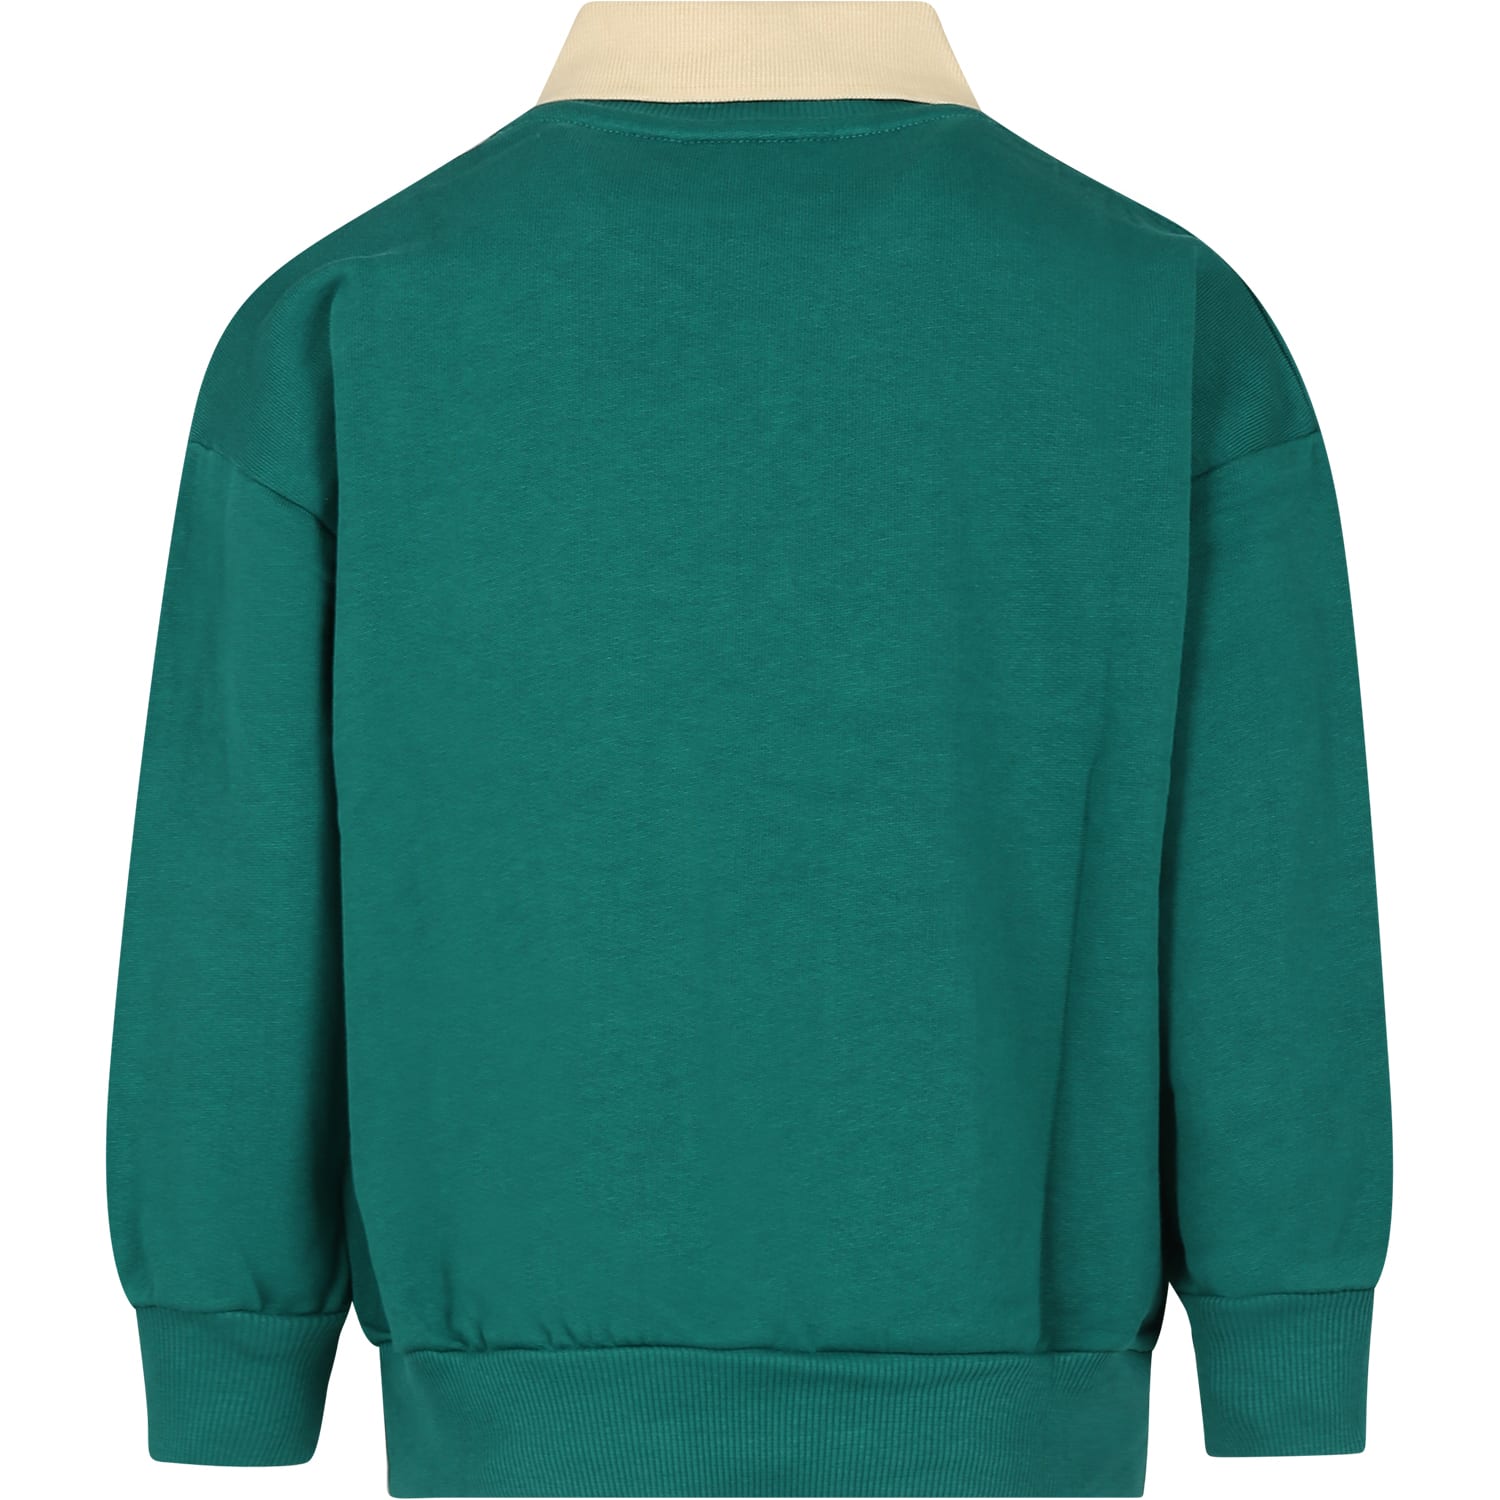 Shop Mini Rodini Green Sweatshirt For Kids With Writing